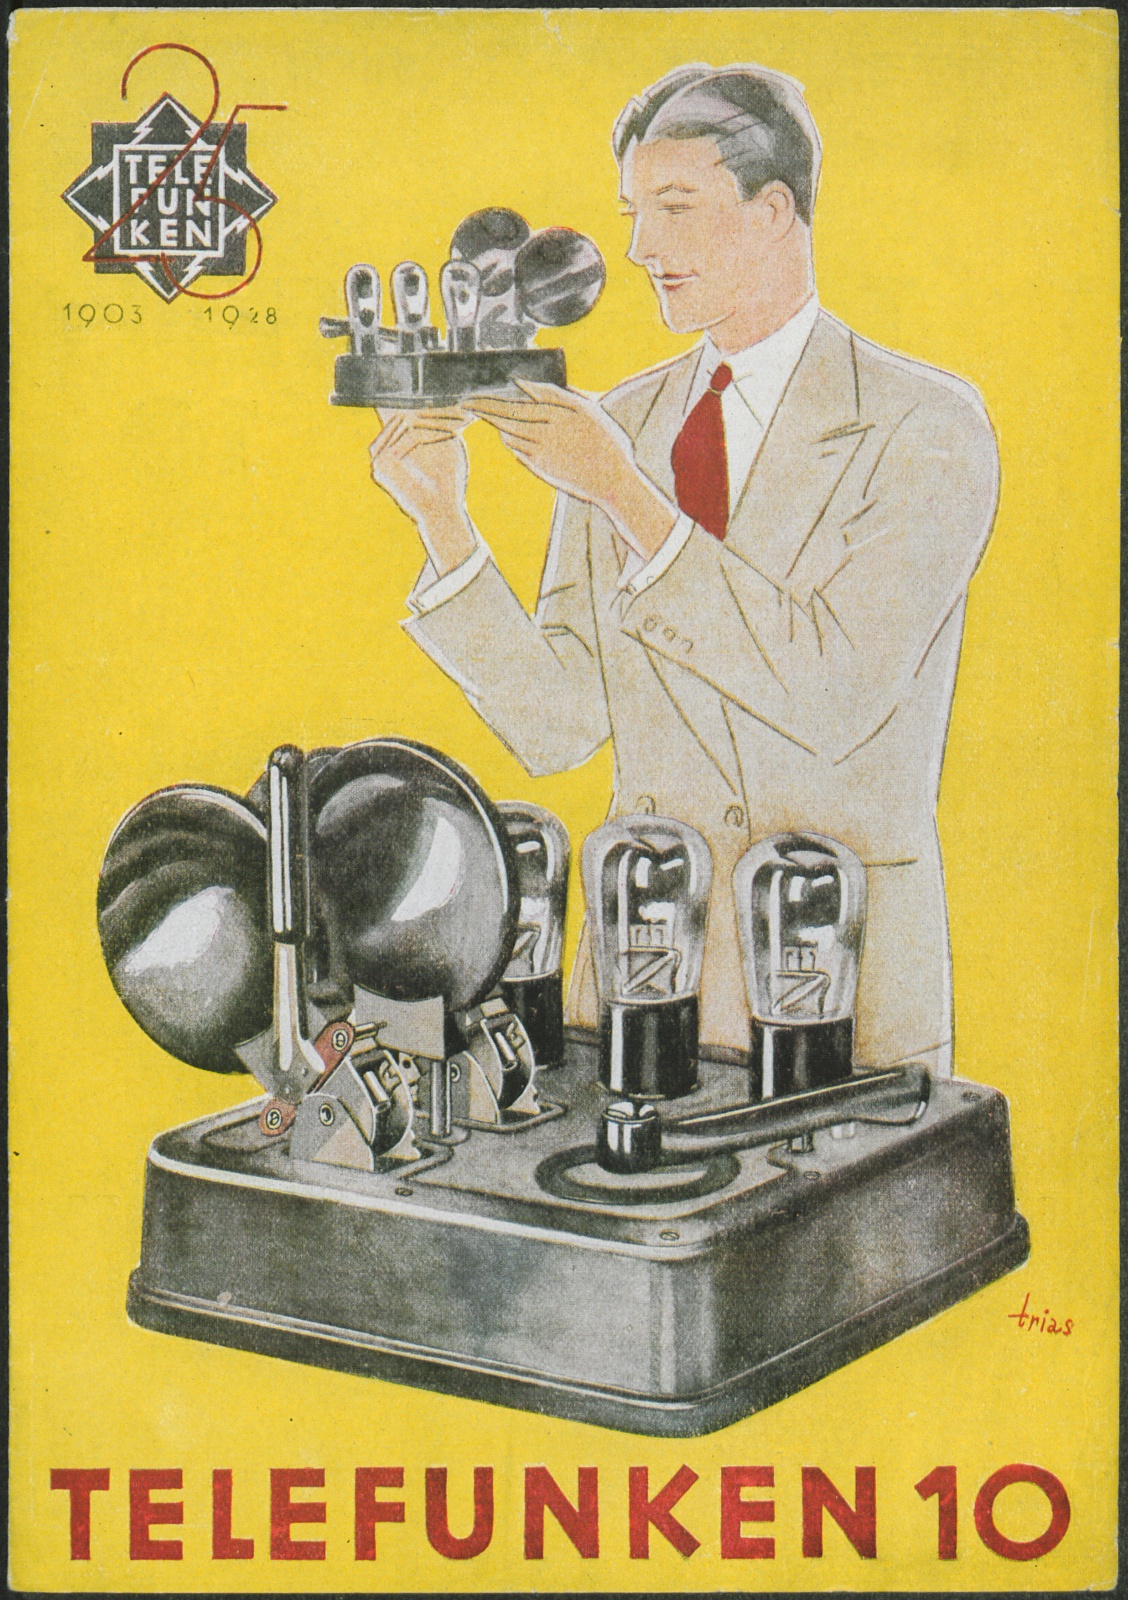 Werbeprospekt: Telefunken 10 (Stiftung Deutsches Technikmuseum Berlin CC0)